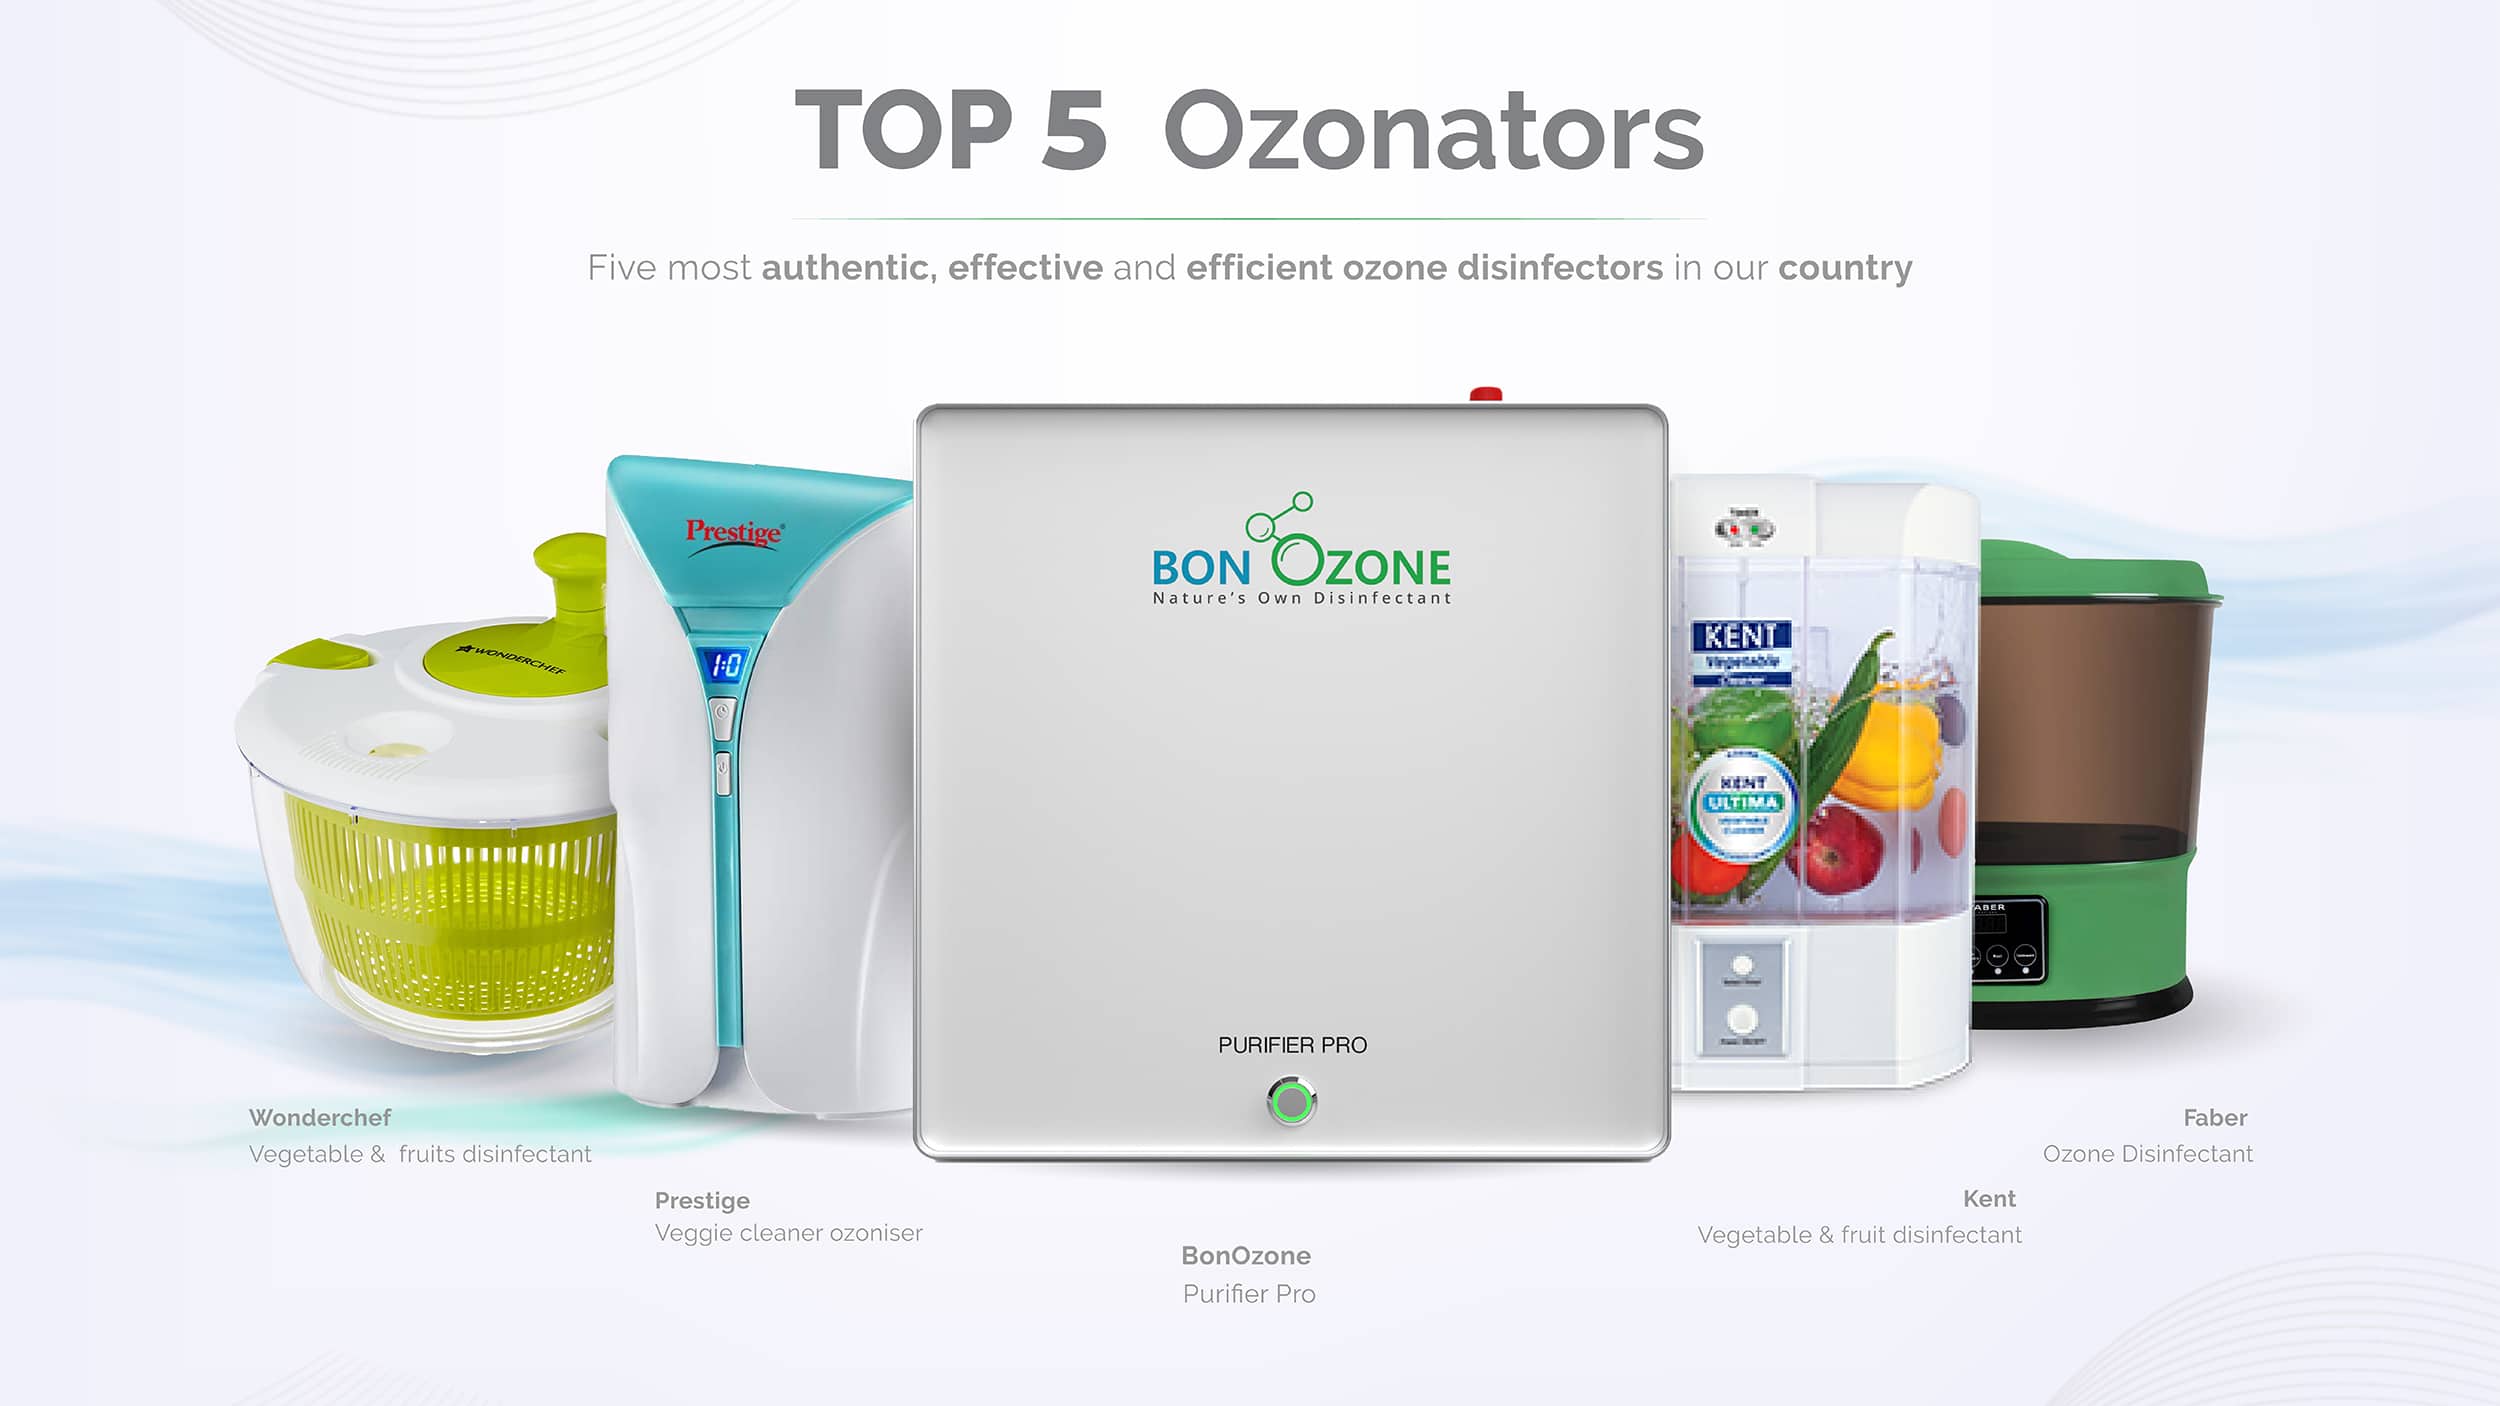 Top 5 Ozonators in India